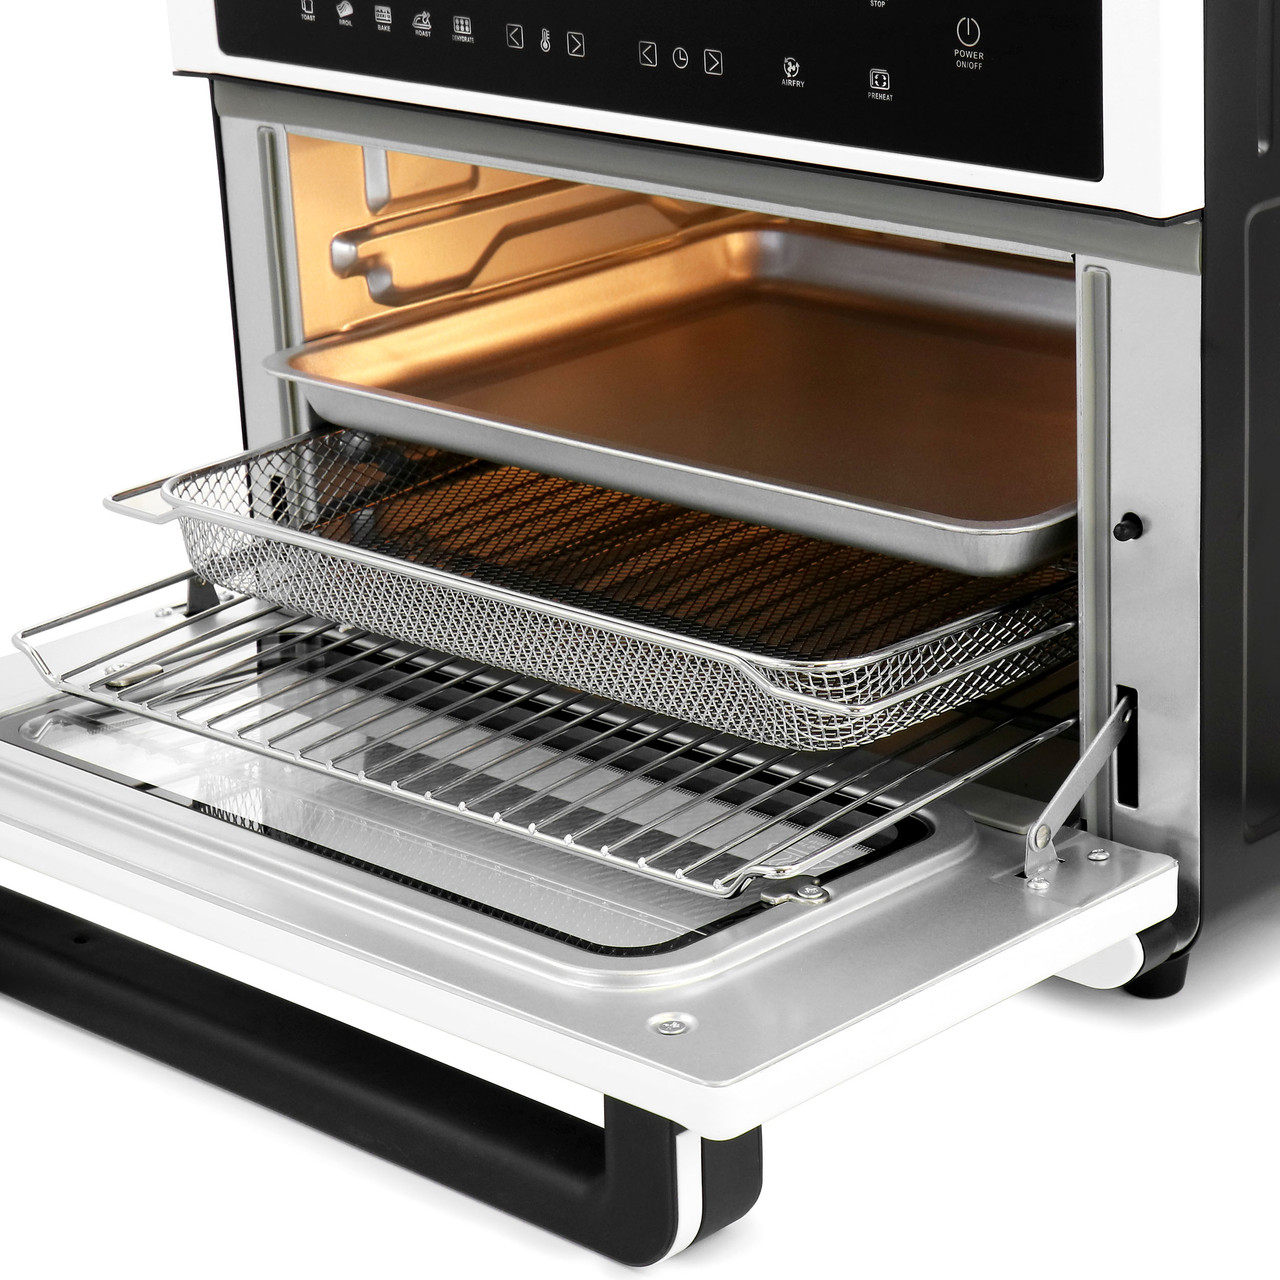 MegaChef Multipurpose Countertop Halogen Oven Air Fryer-Rotisserie-Roaster in Black